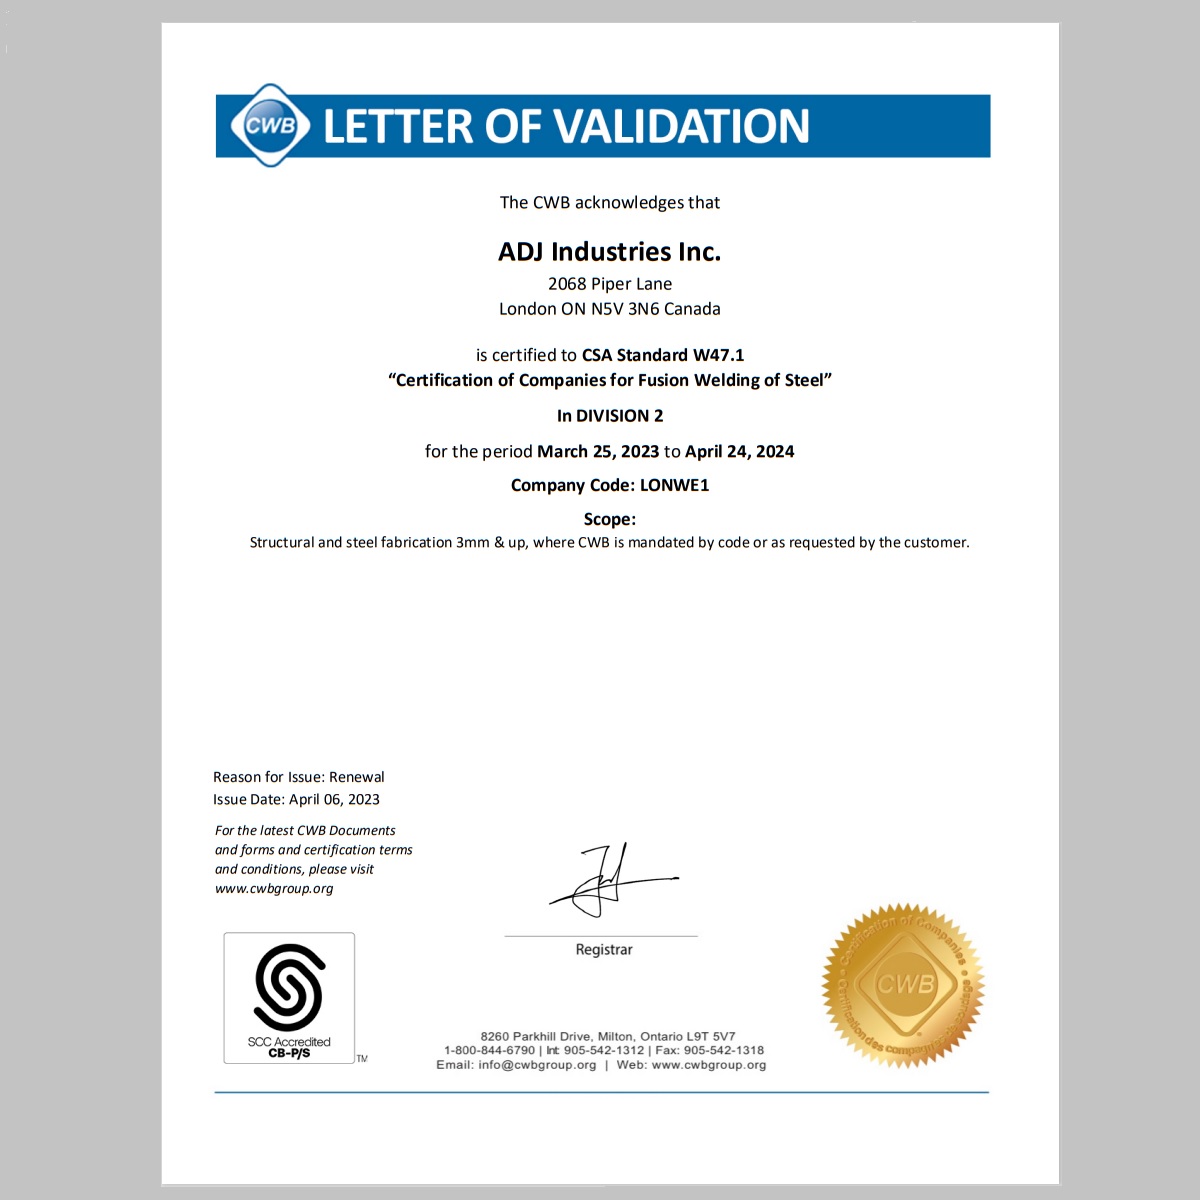 ADJ Industries Inc. CSA Standard W47.1 Fusion Welding Steel CWB Certificate